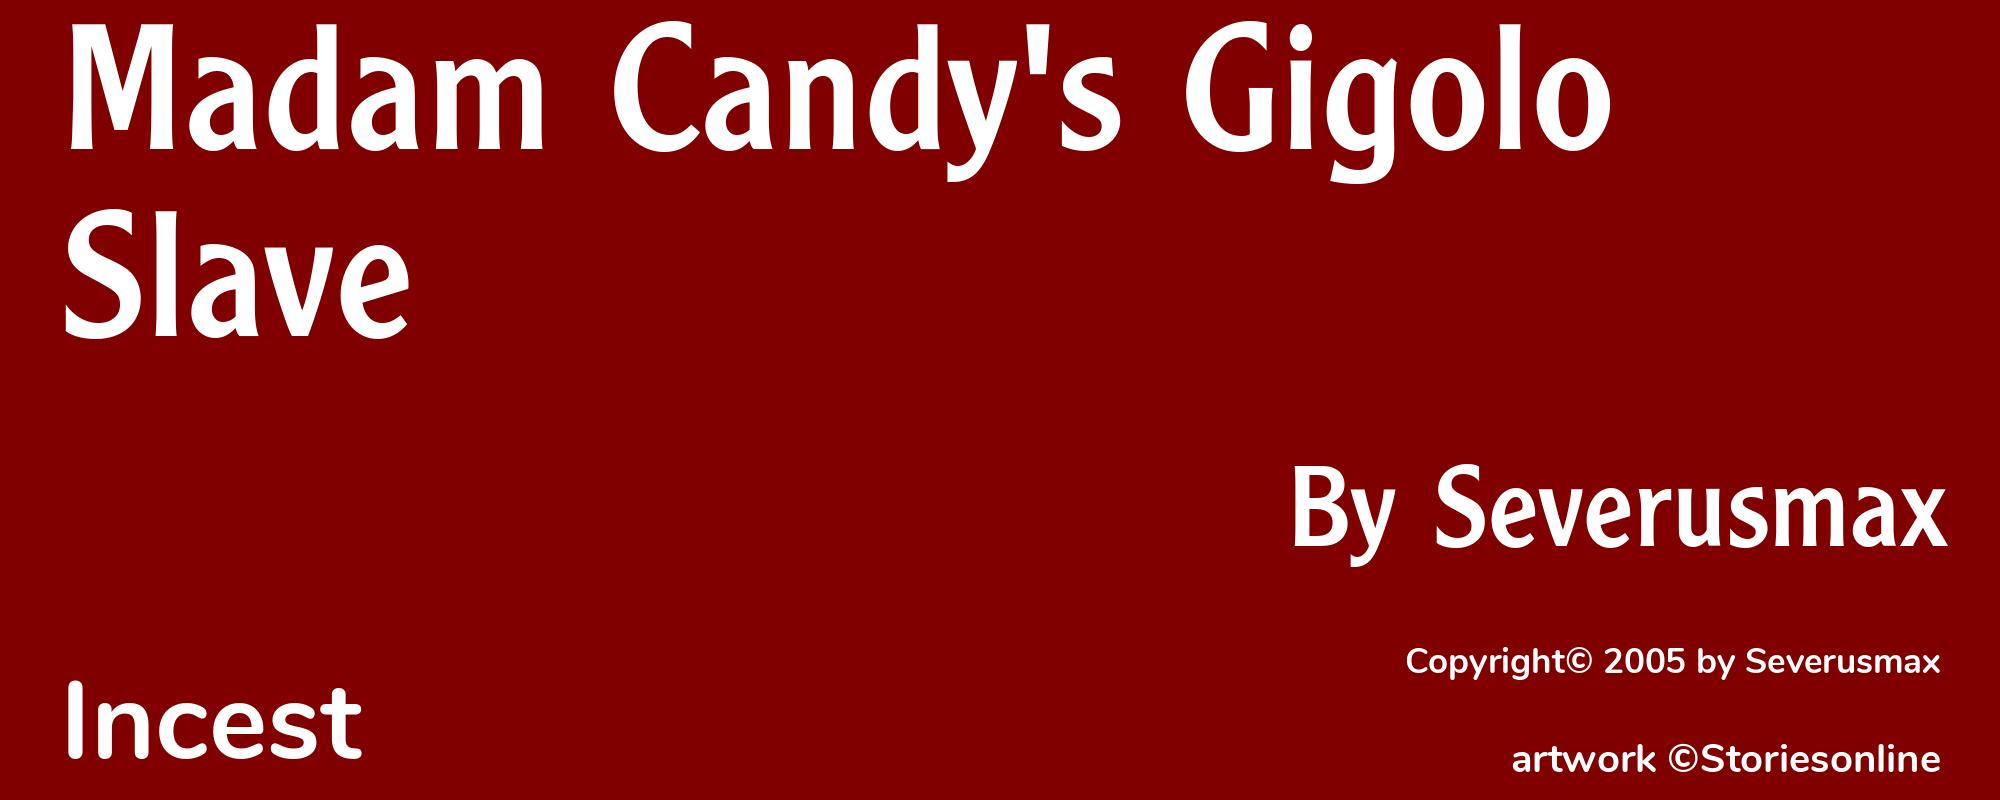 Madam Candy's Gigolo Slave - Cover